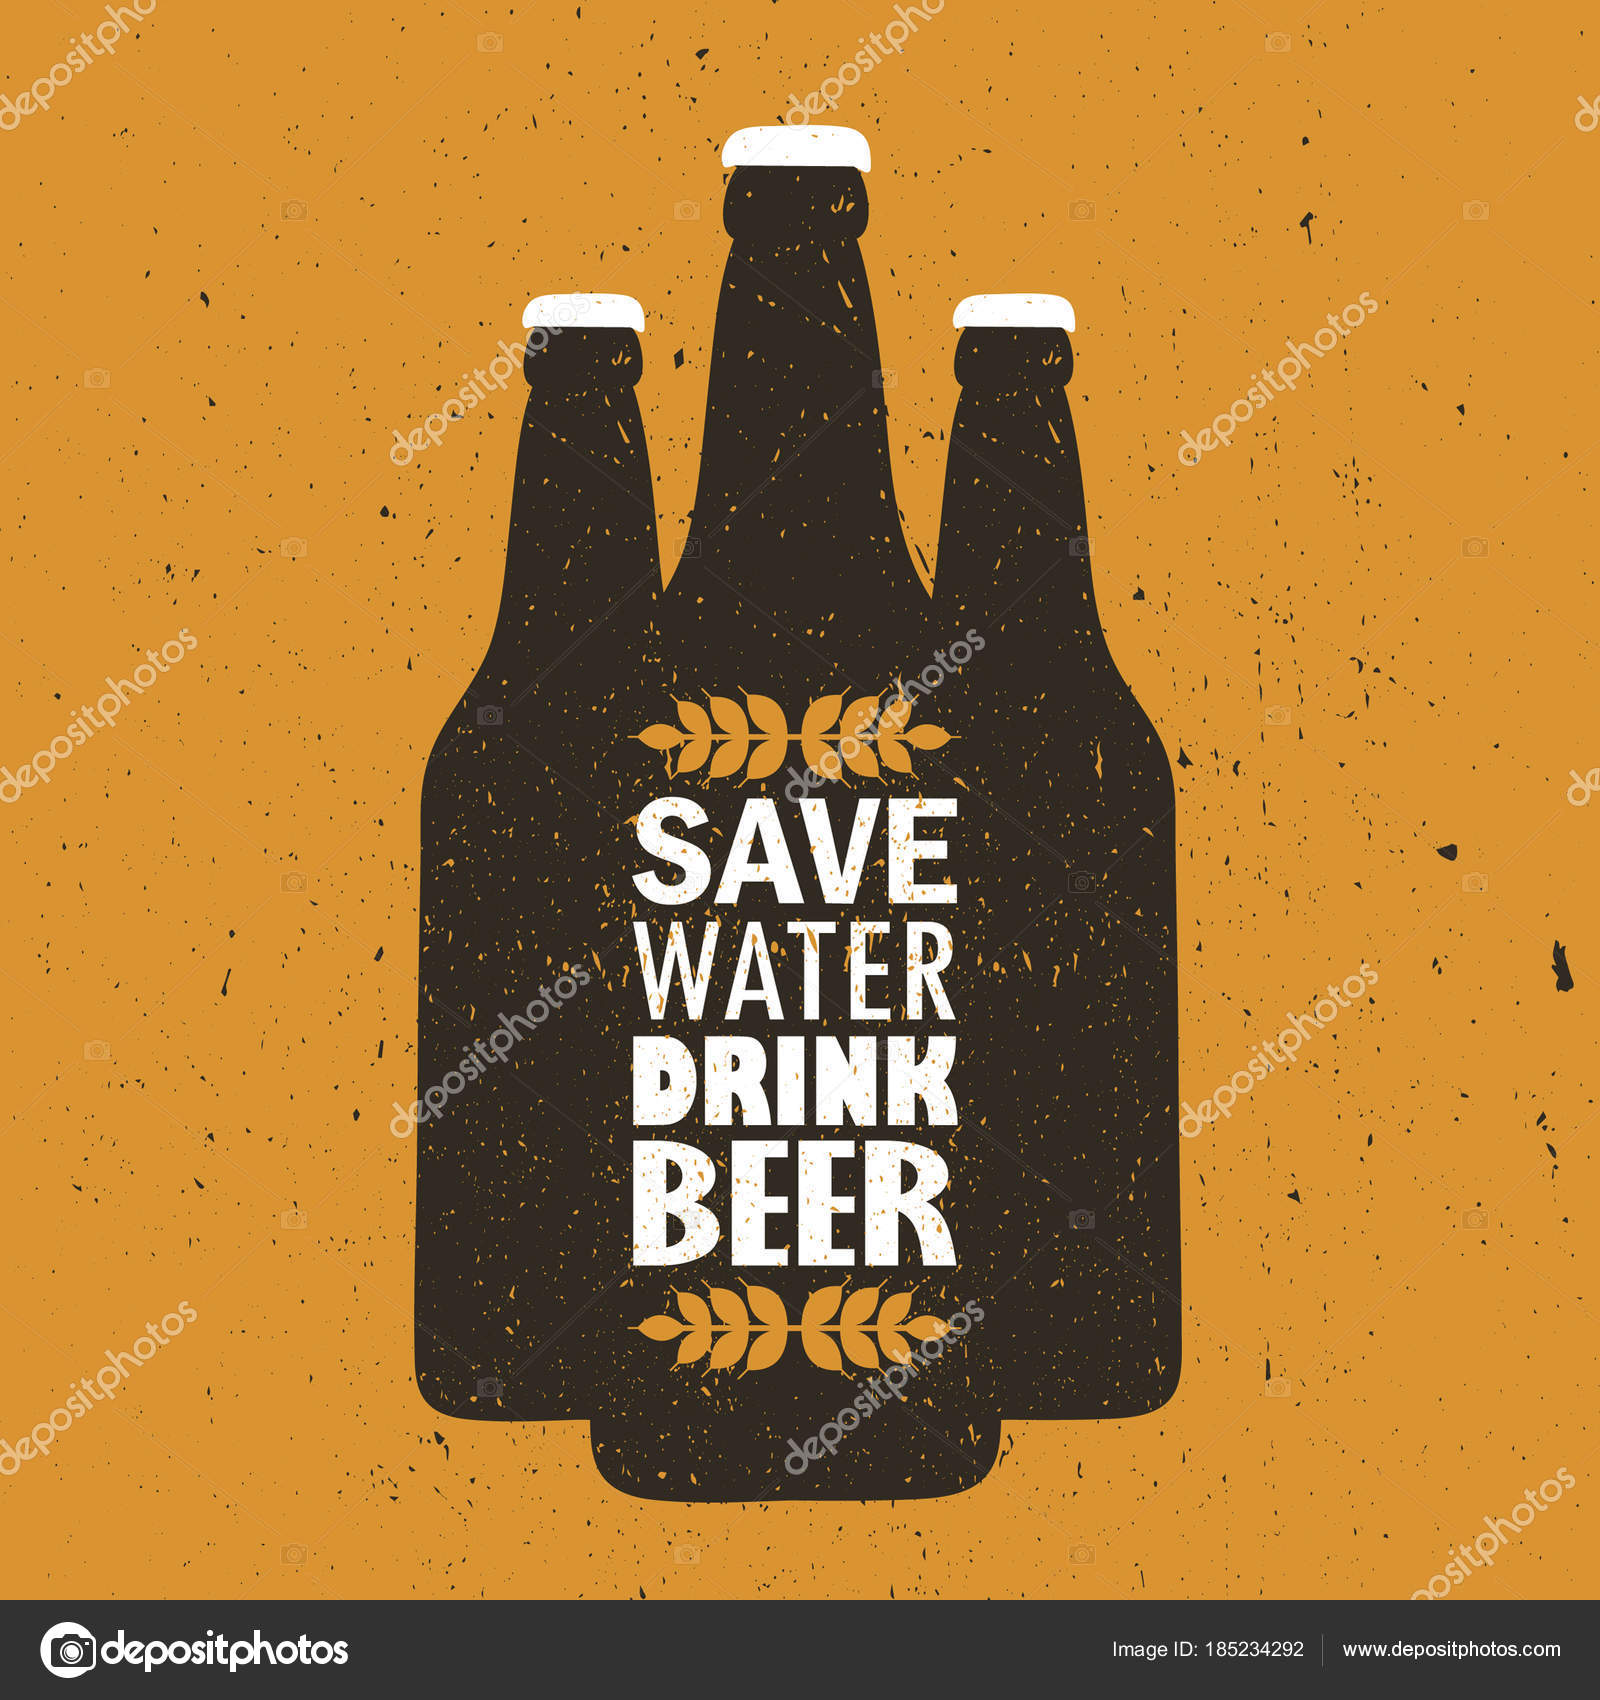 Download áˆ Poster On Save Water With Slogan In English Stock Pictures Royalty Free Save Water Drink Beer Images Download On Depositphotos